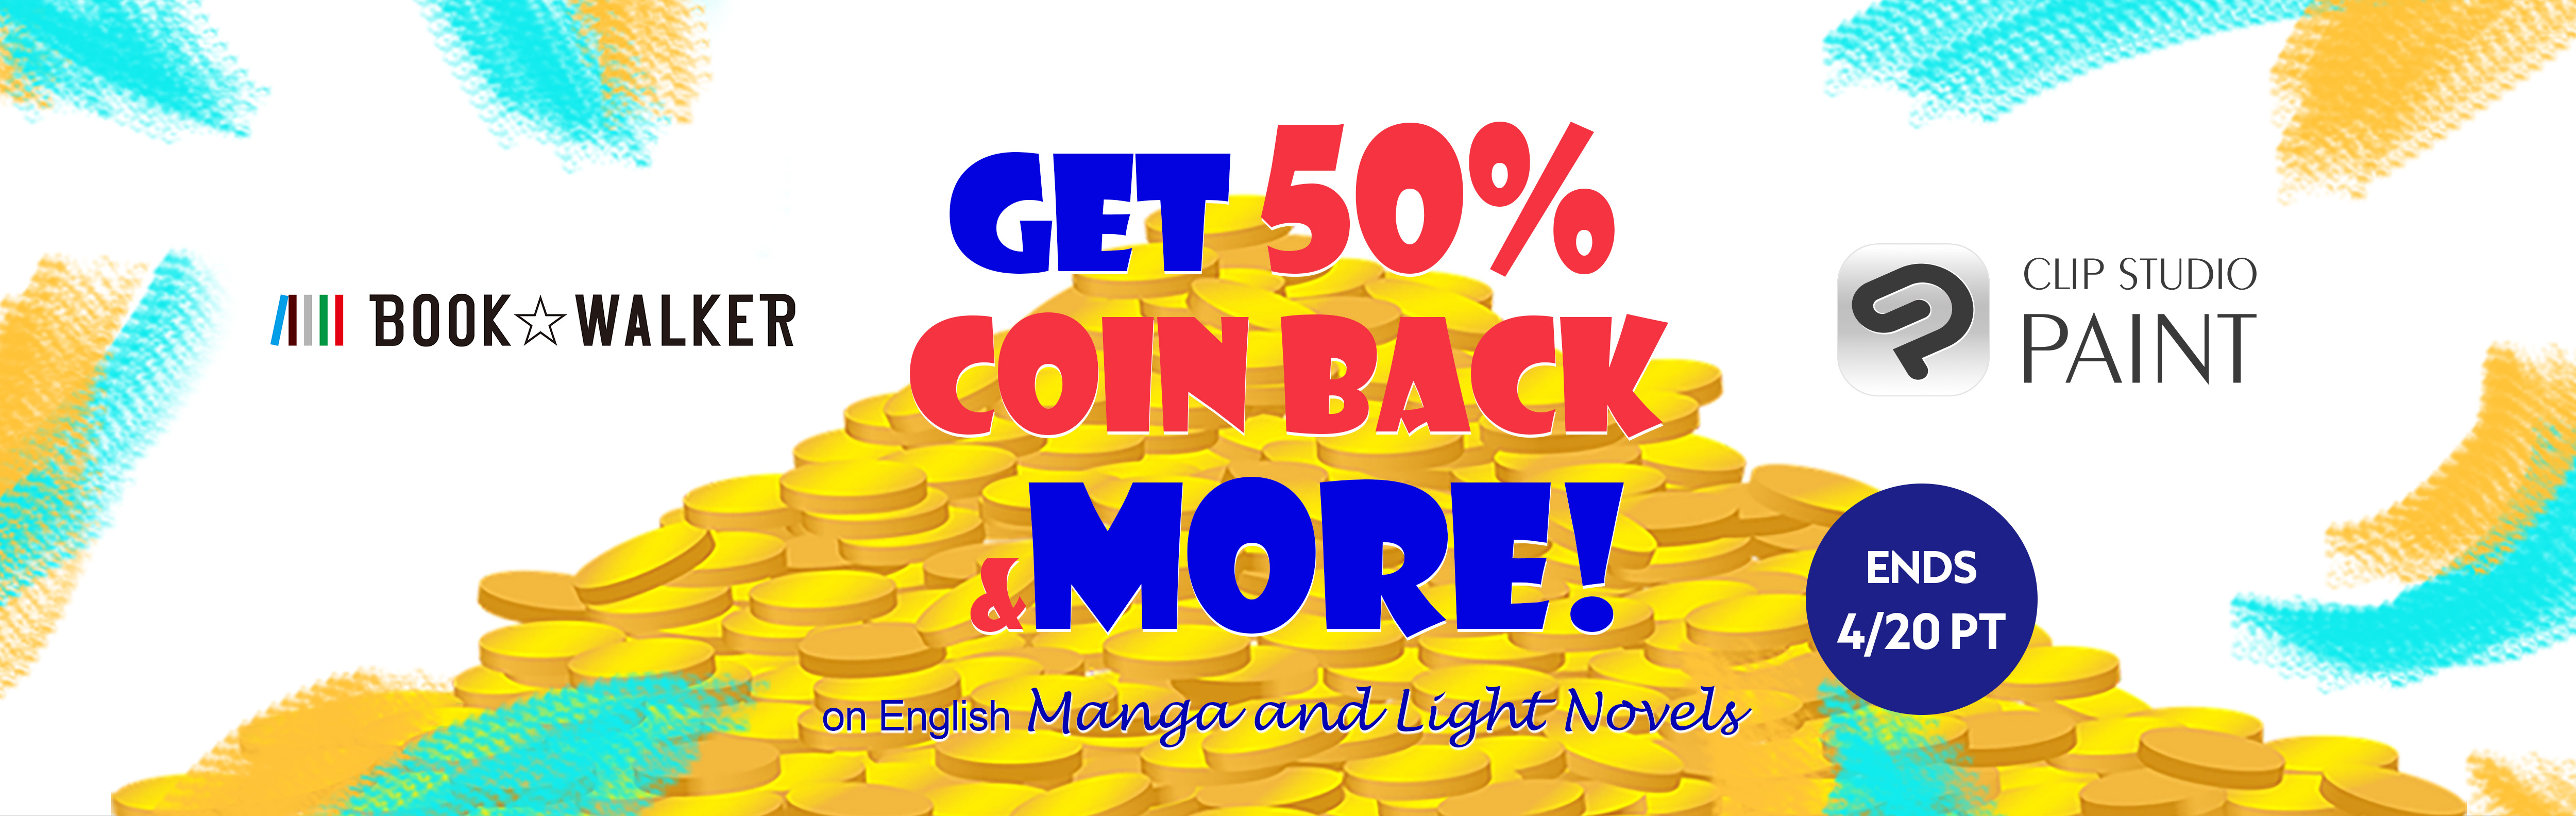 BookWalker & CLIP STUDIO PAINT - Get 50% Coin Back & More!